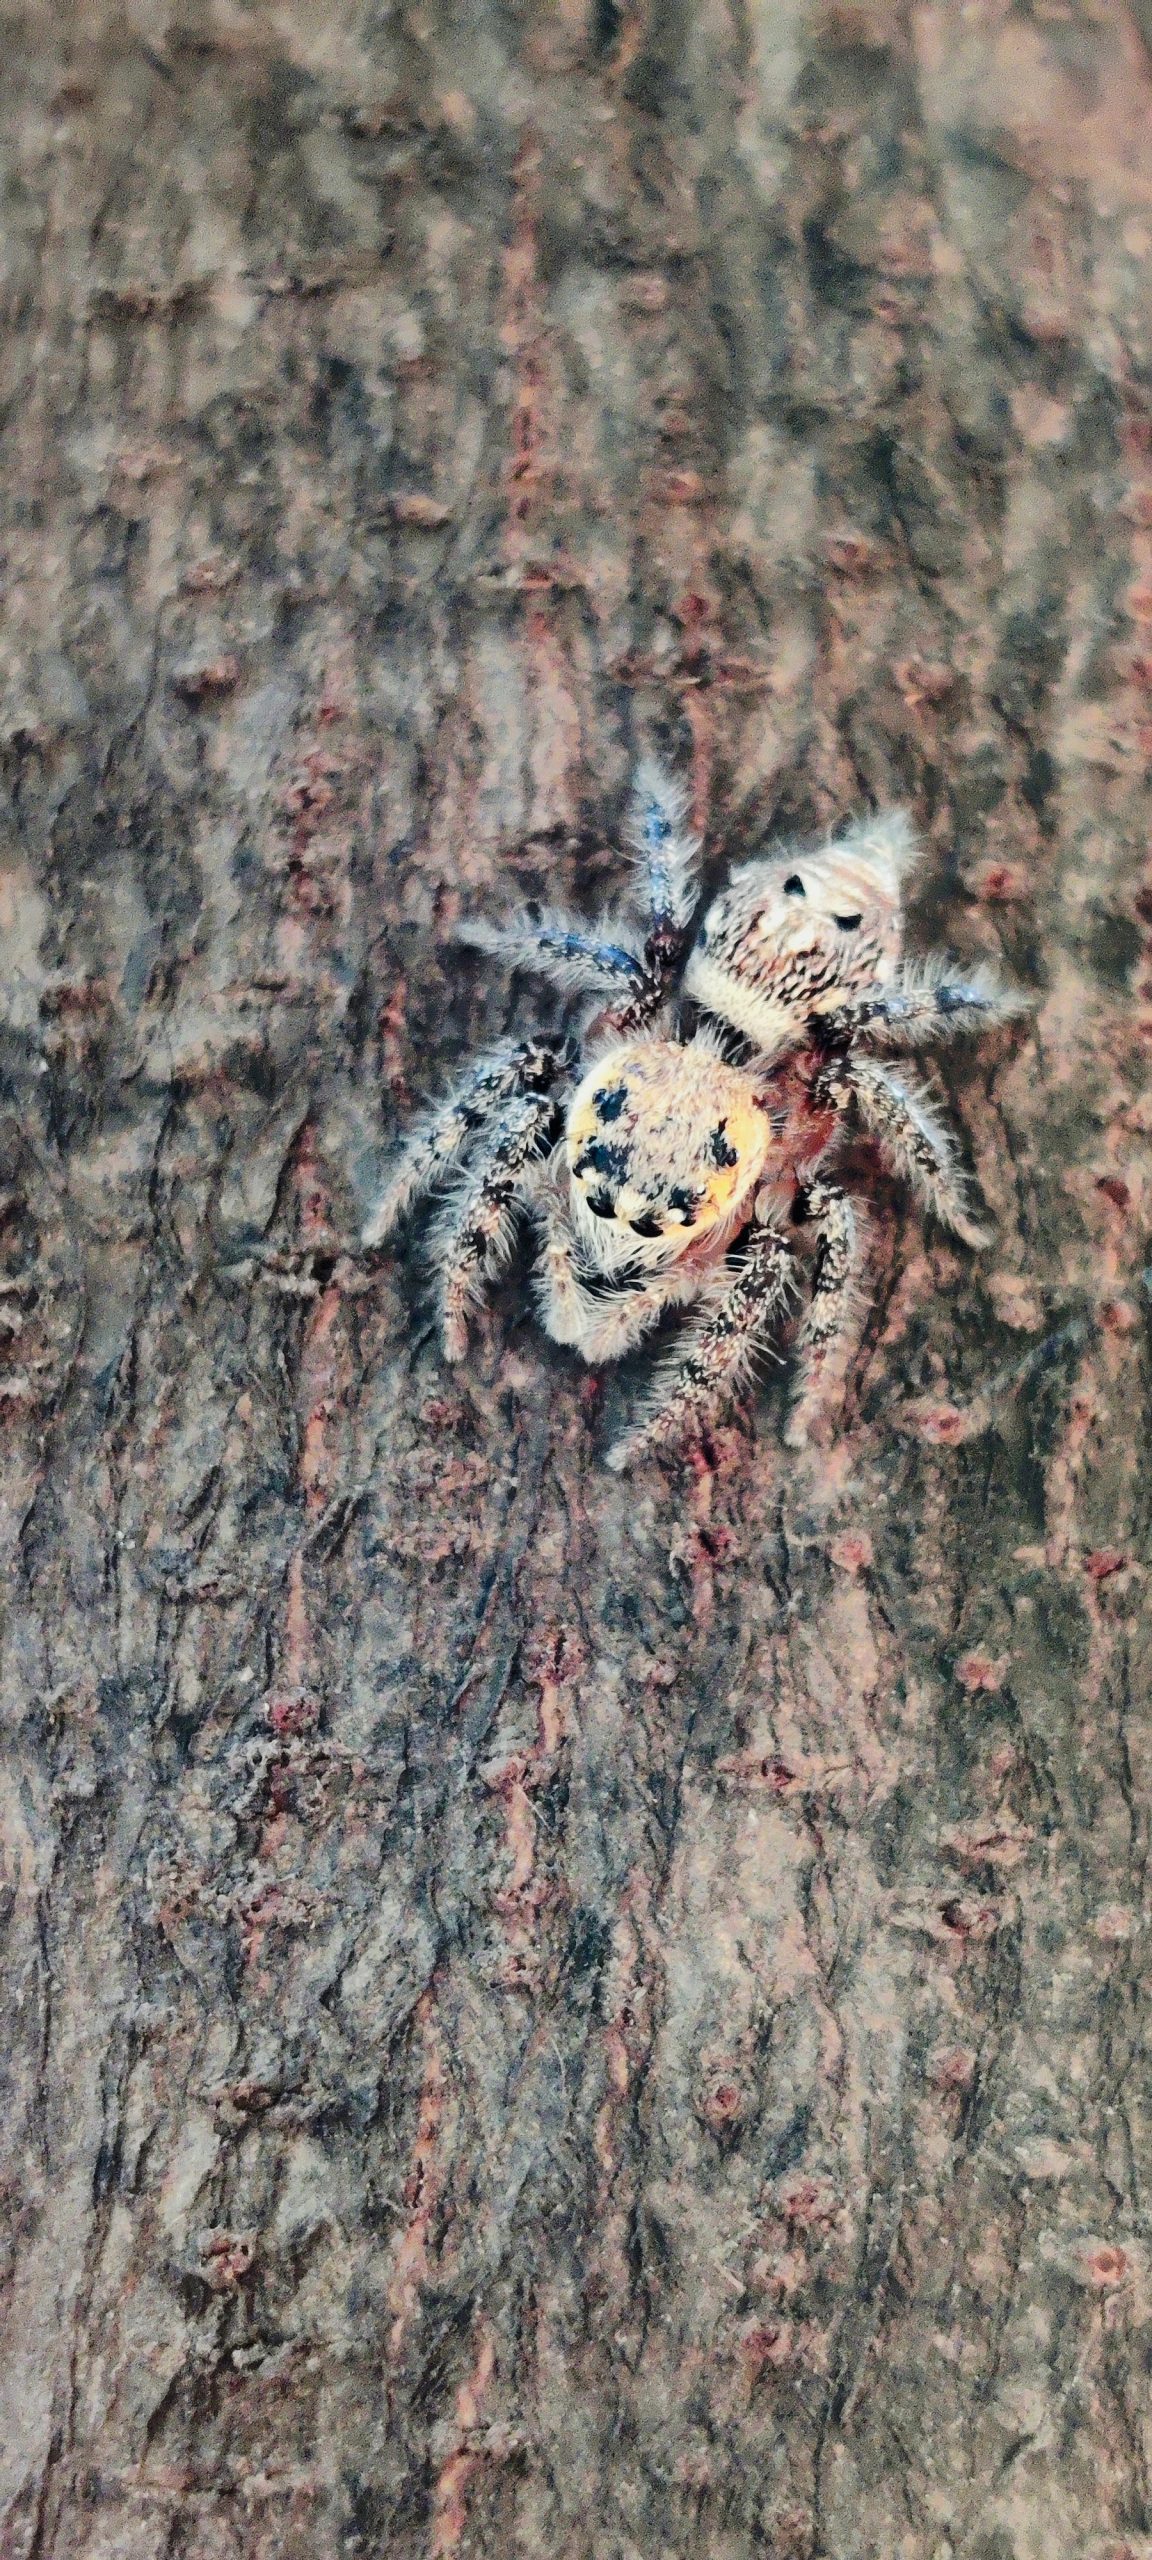 Spider on tree branch